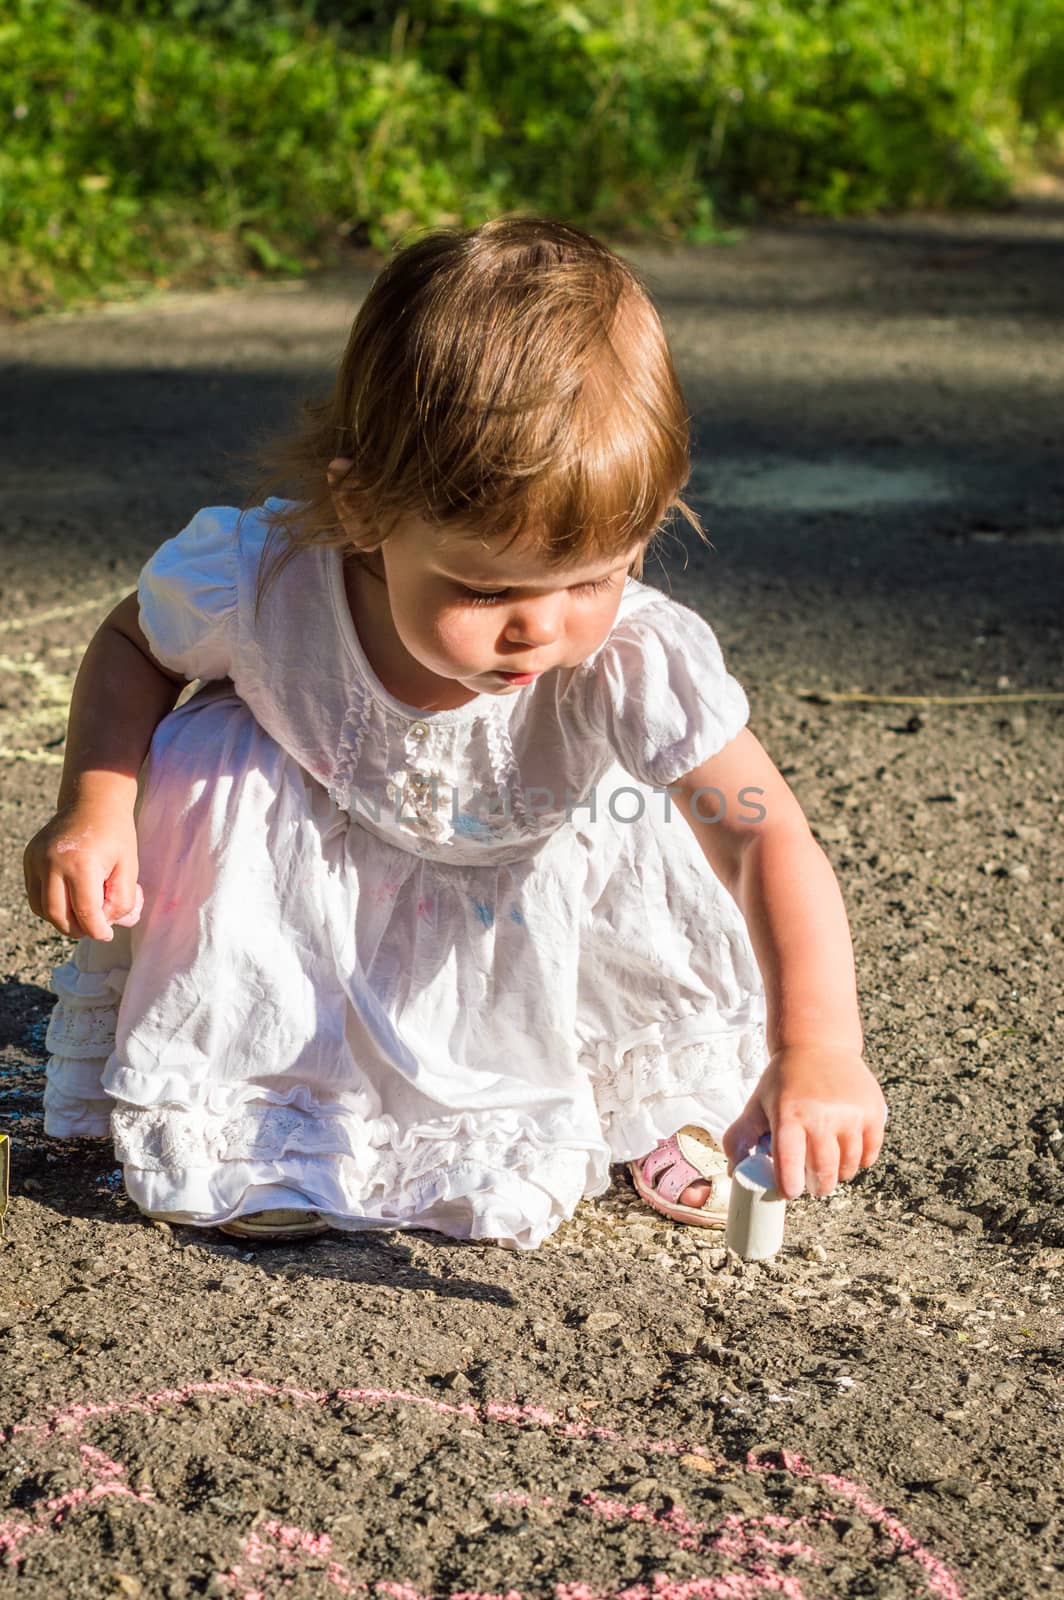 a little girl draws on asphalt in the Park in summer